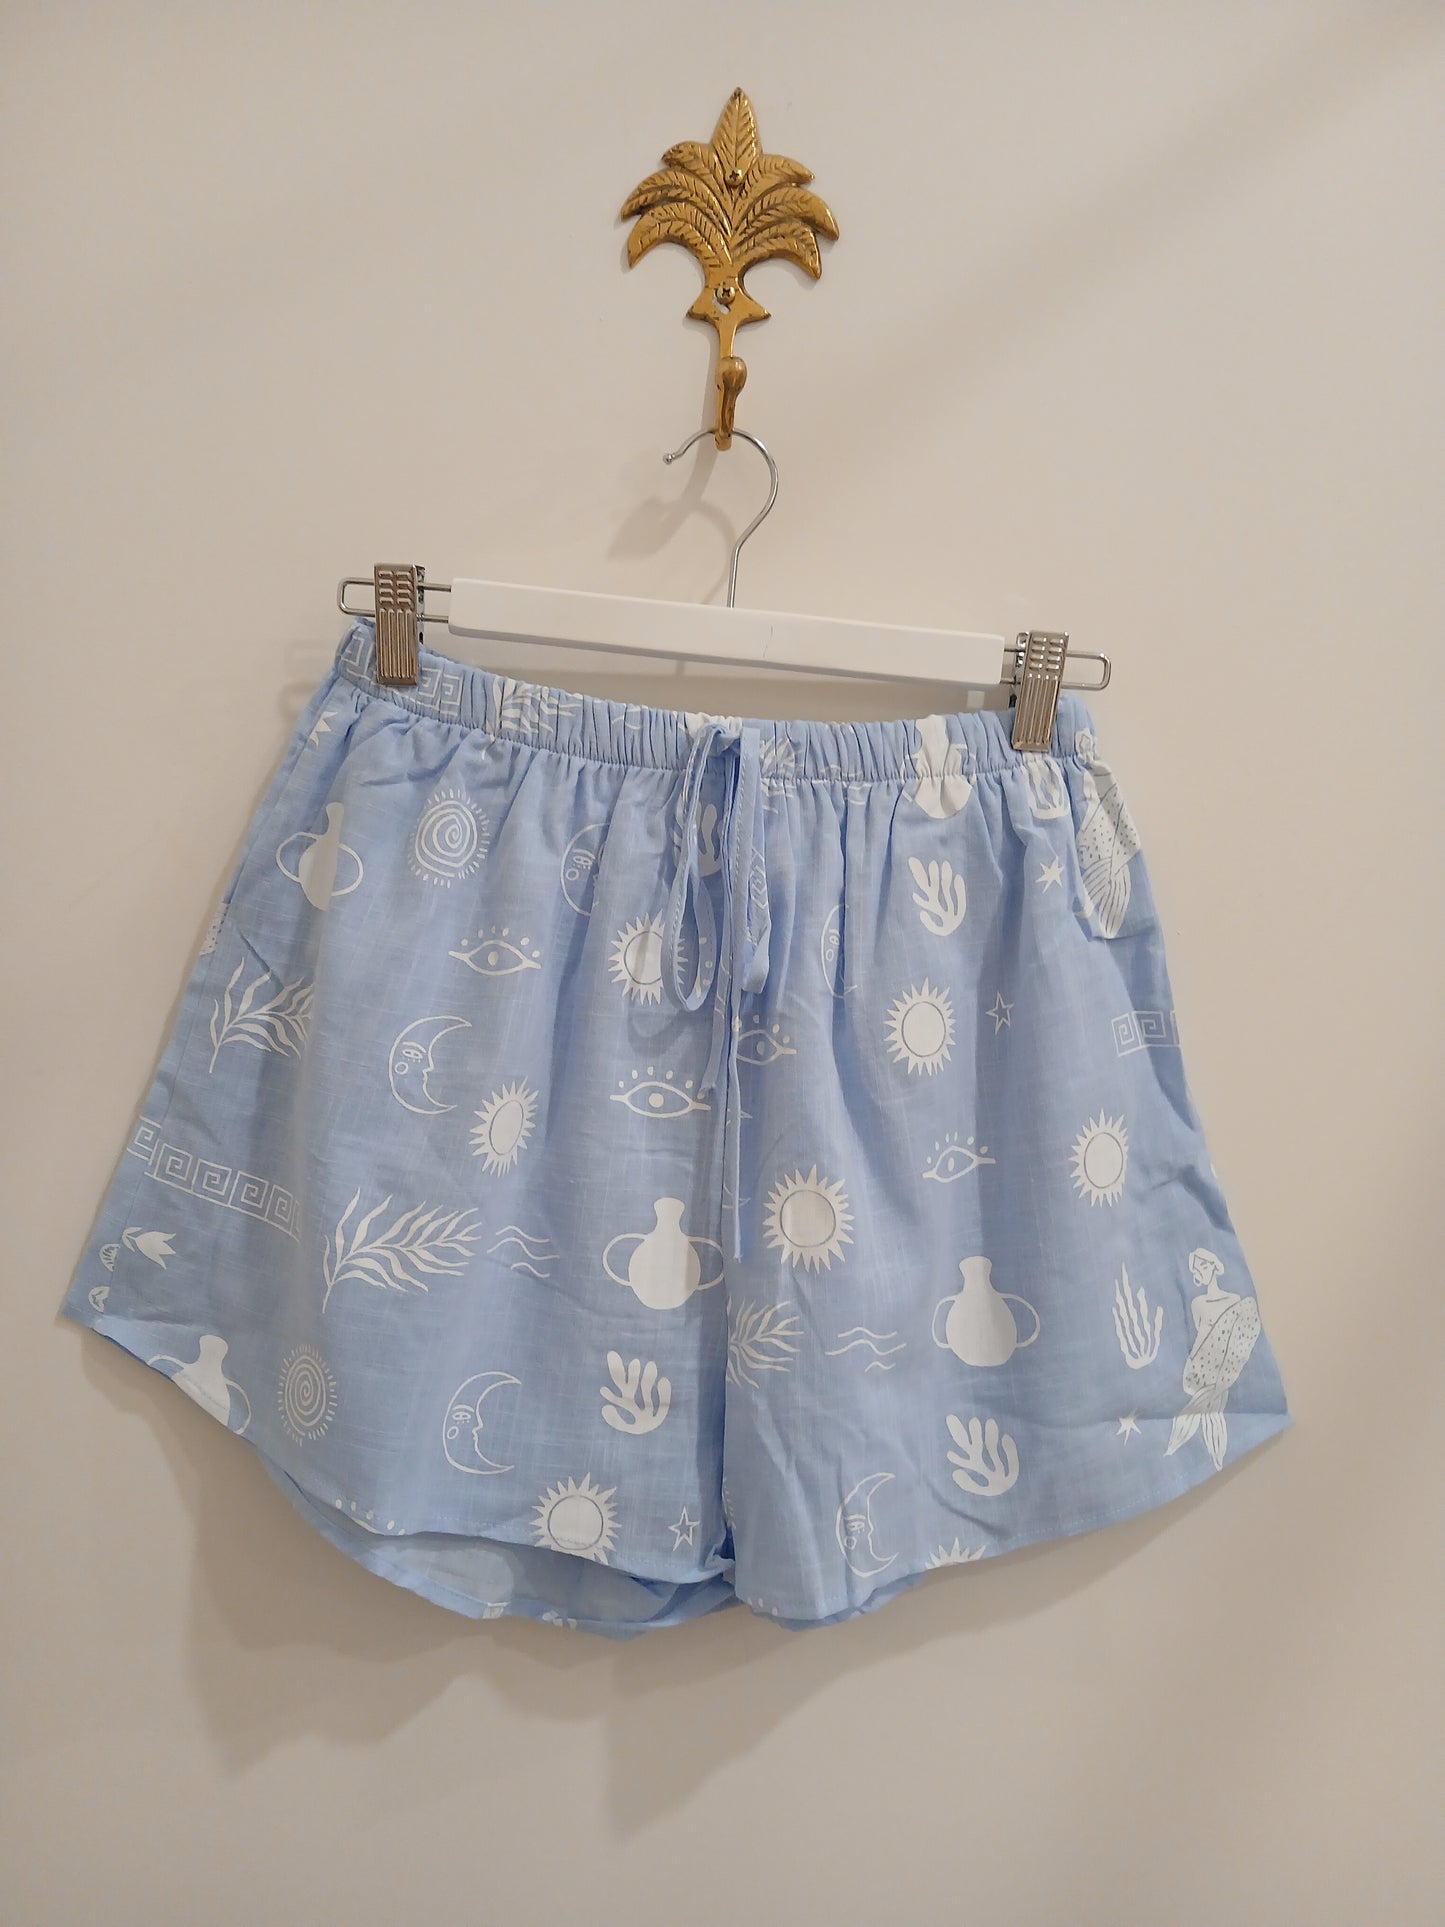 By Frankie - Blue Mermaid Button Up Shirt & Short Set